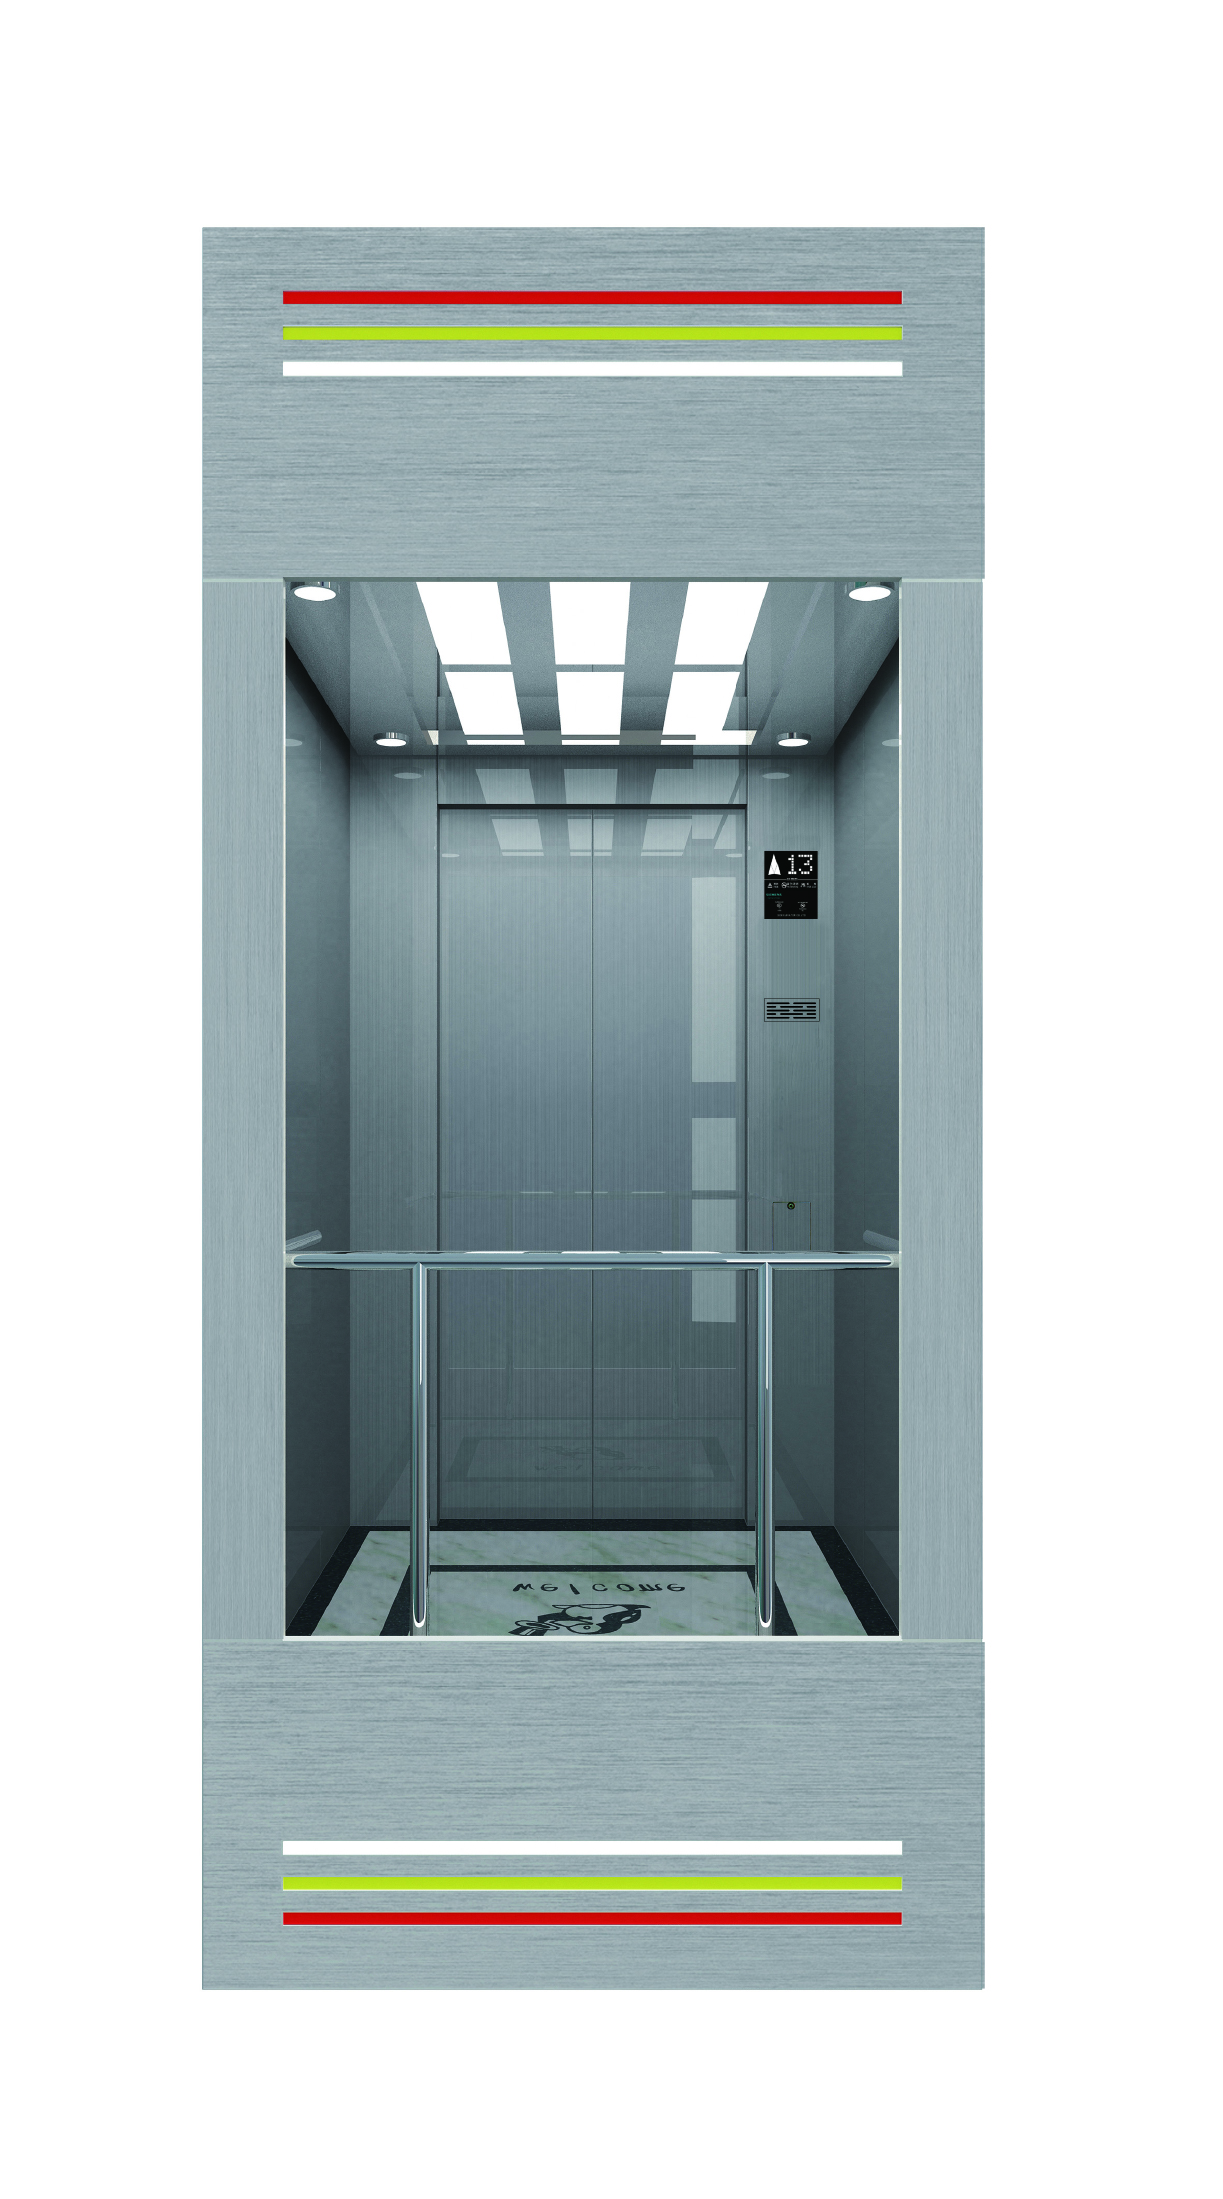 Siemens Elevator Bangladesh